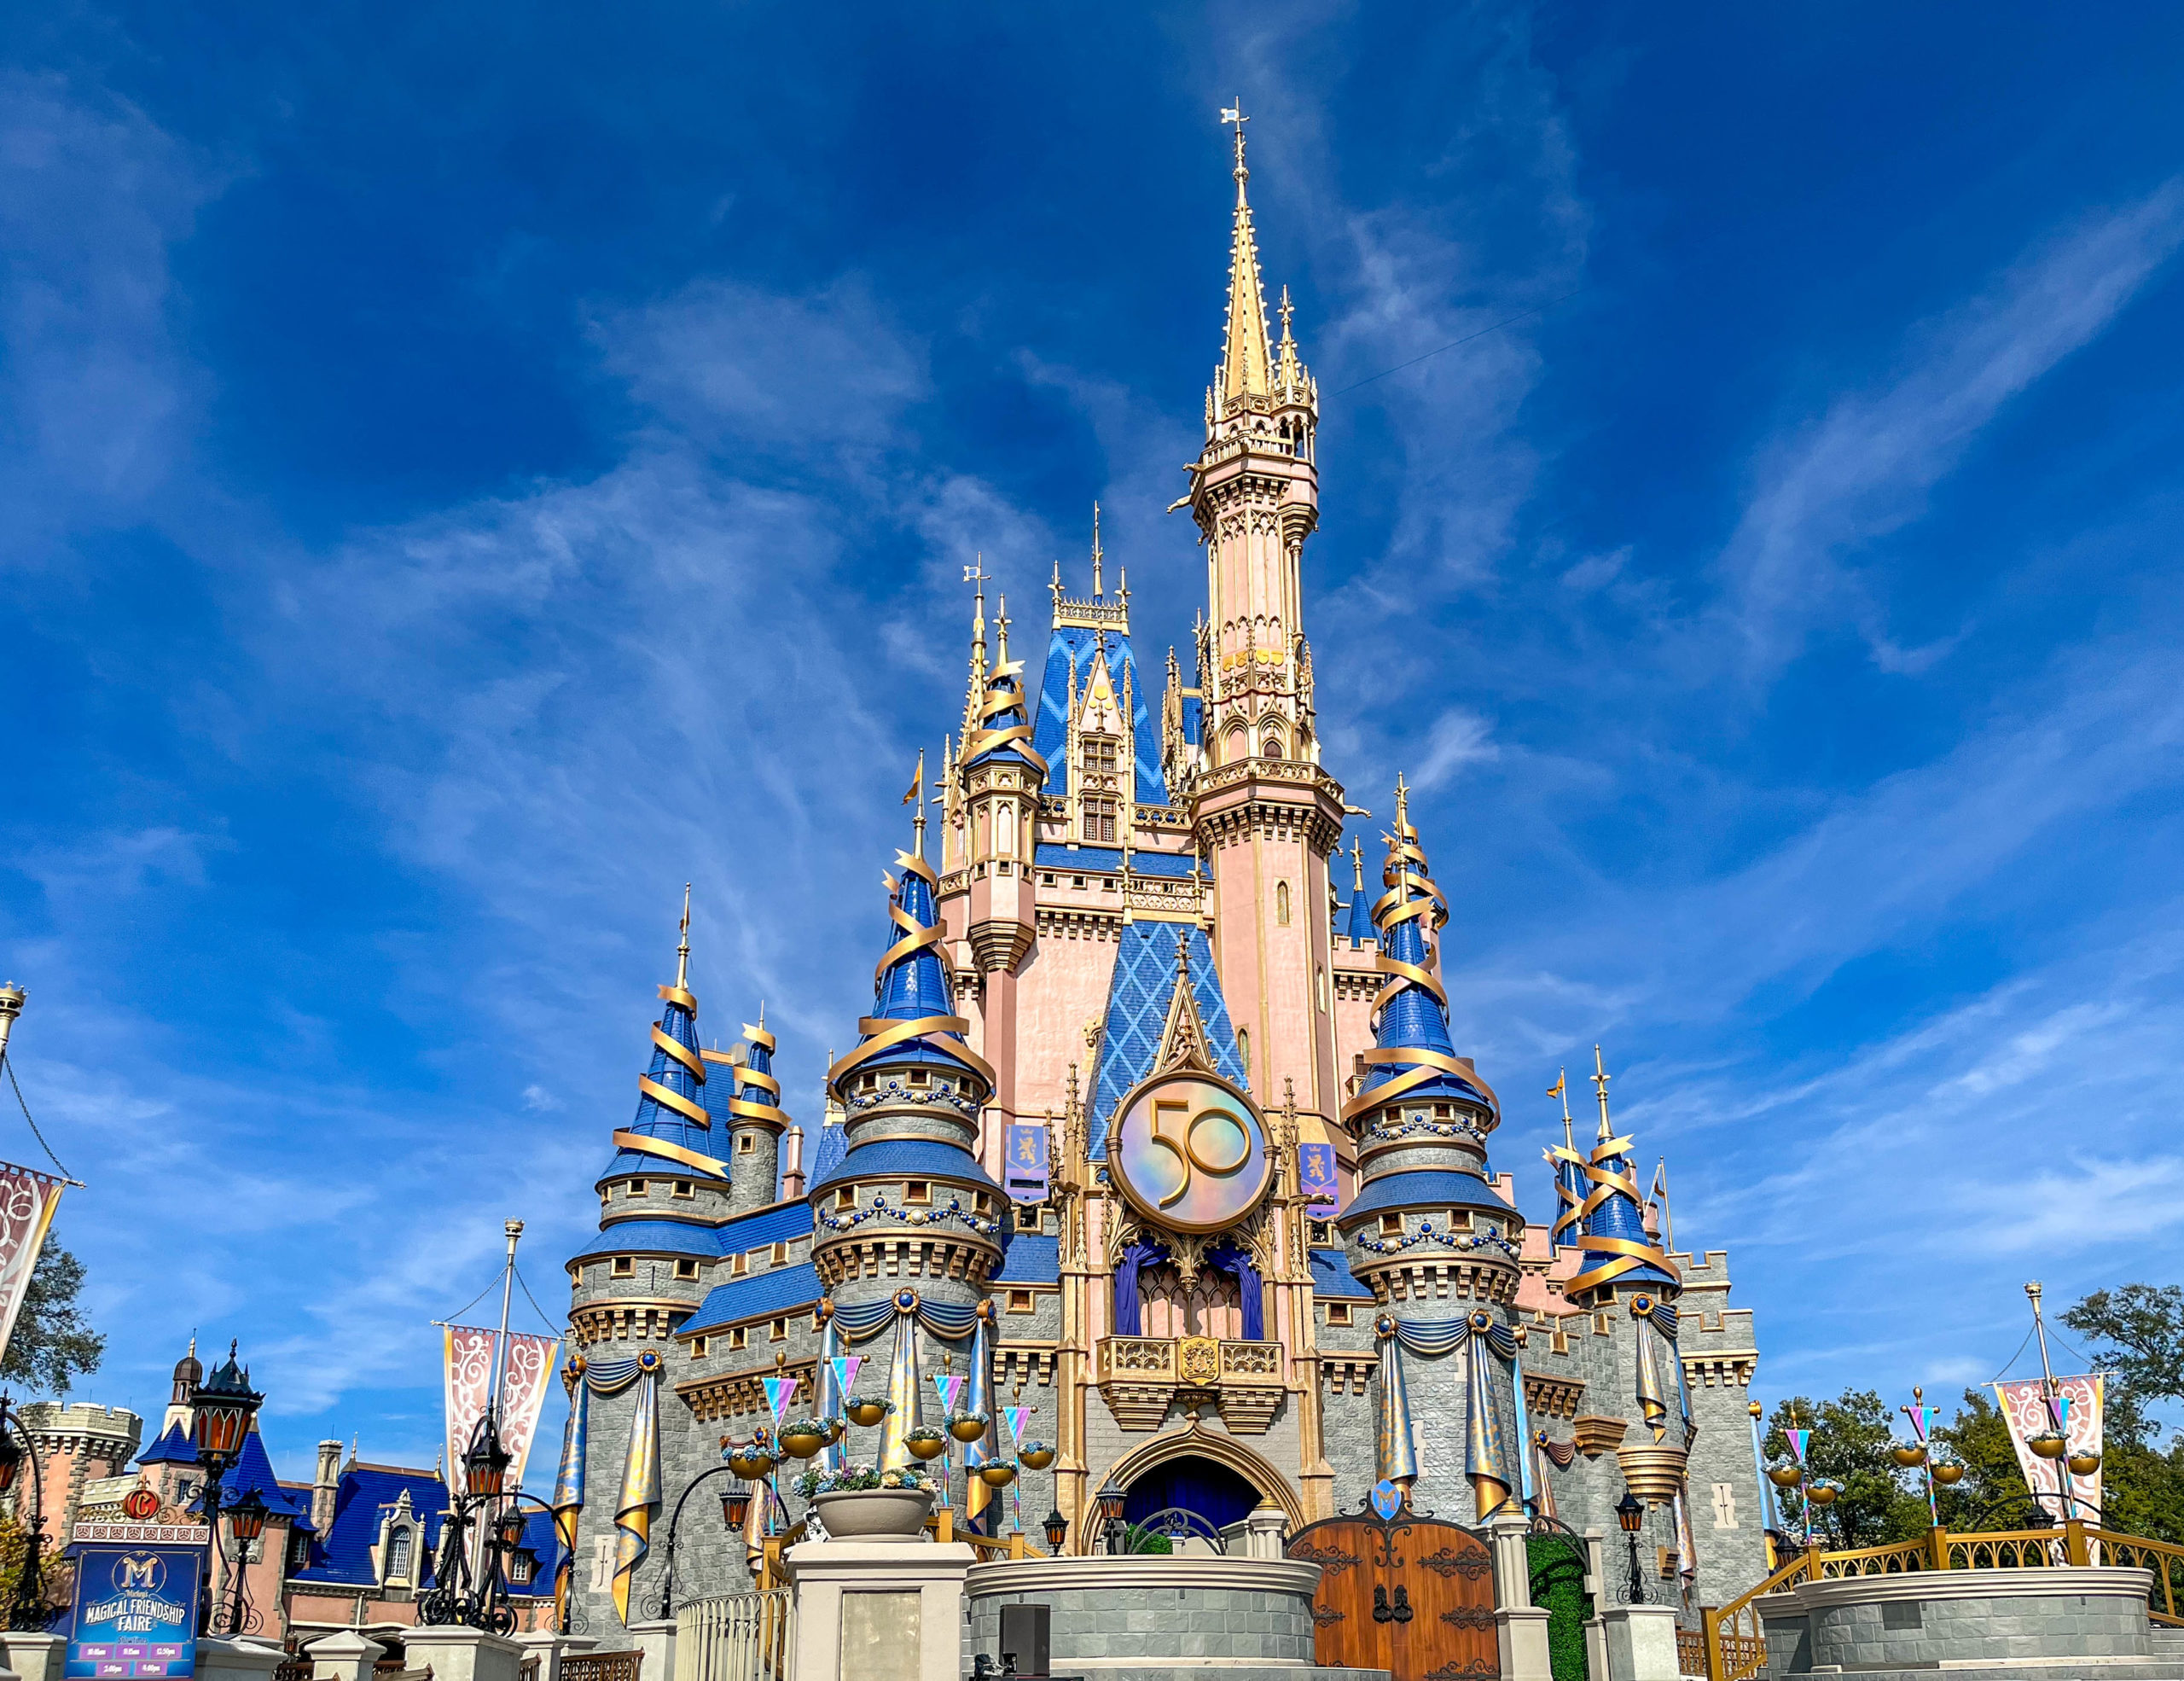 Cinderella Castle during Disney World's 50th anniversary